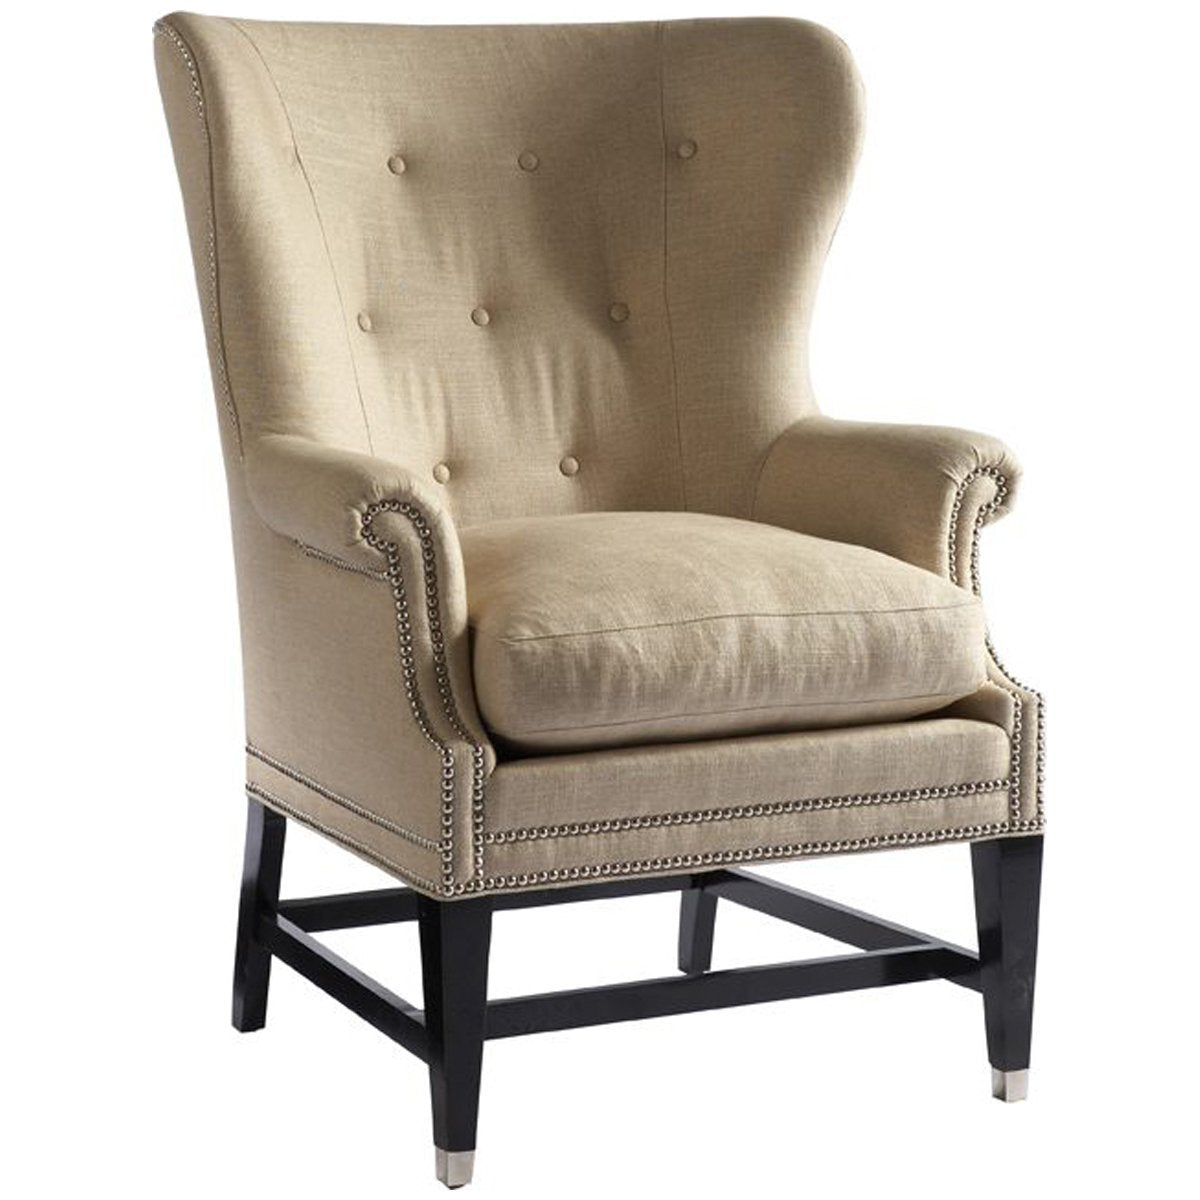 Lillian August Farrington Chair